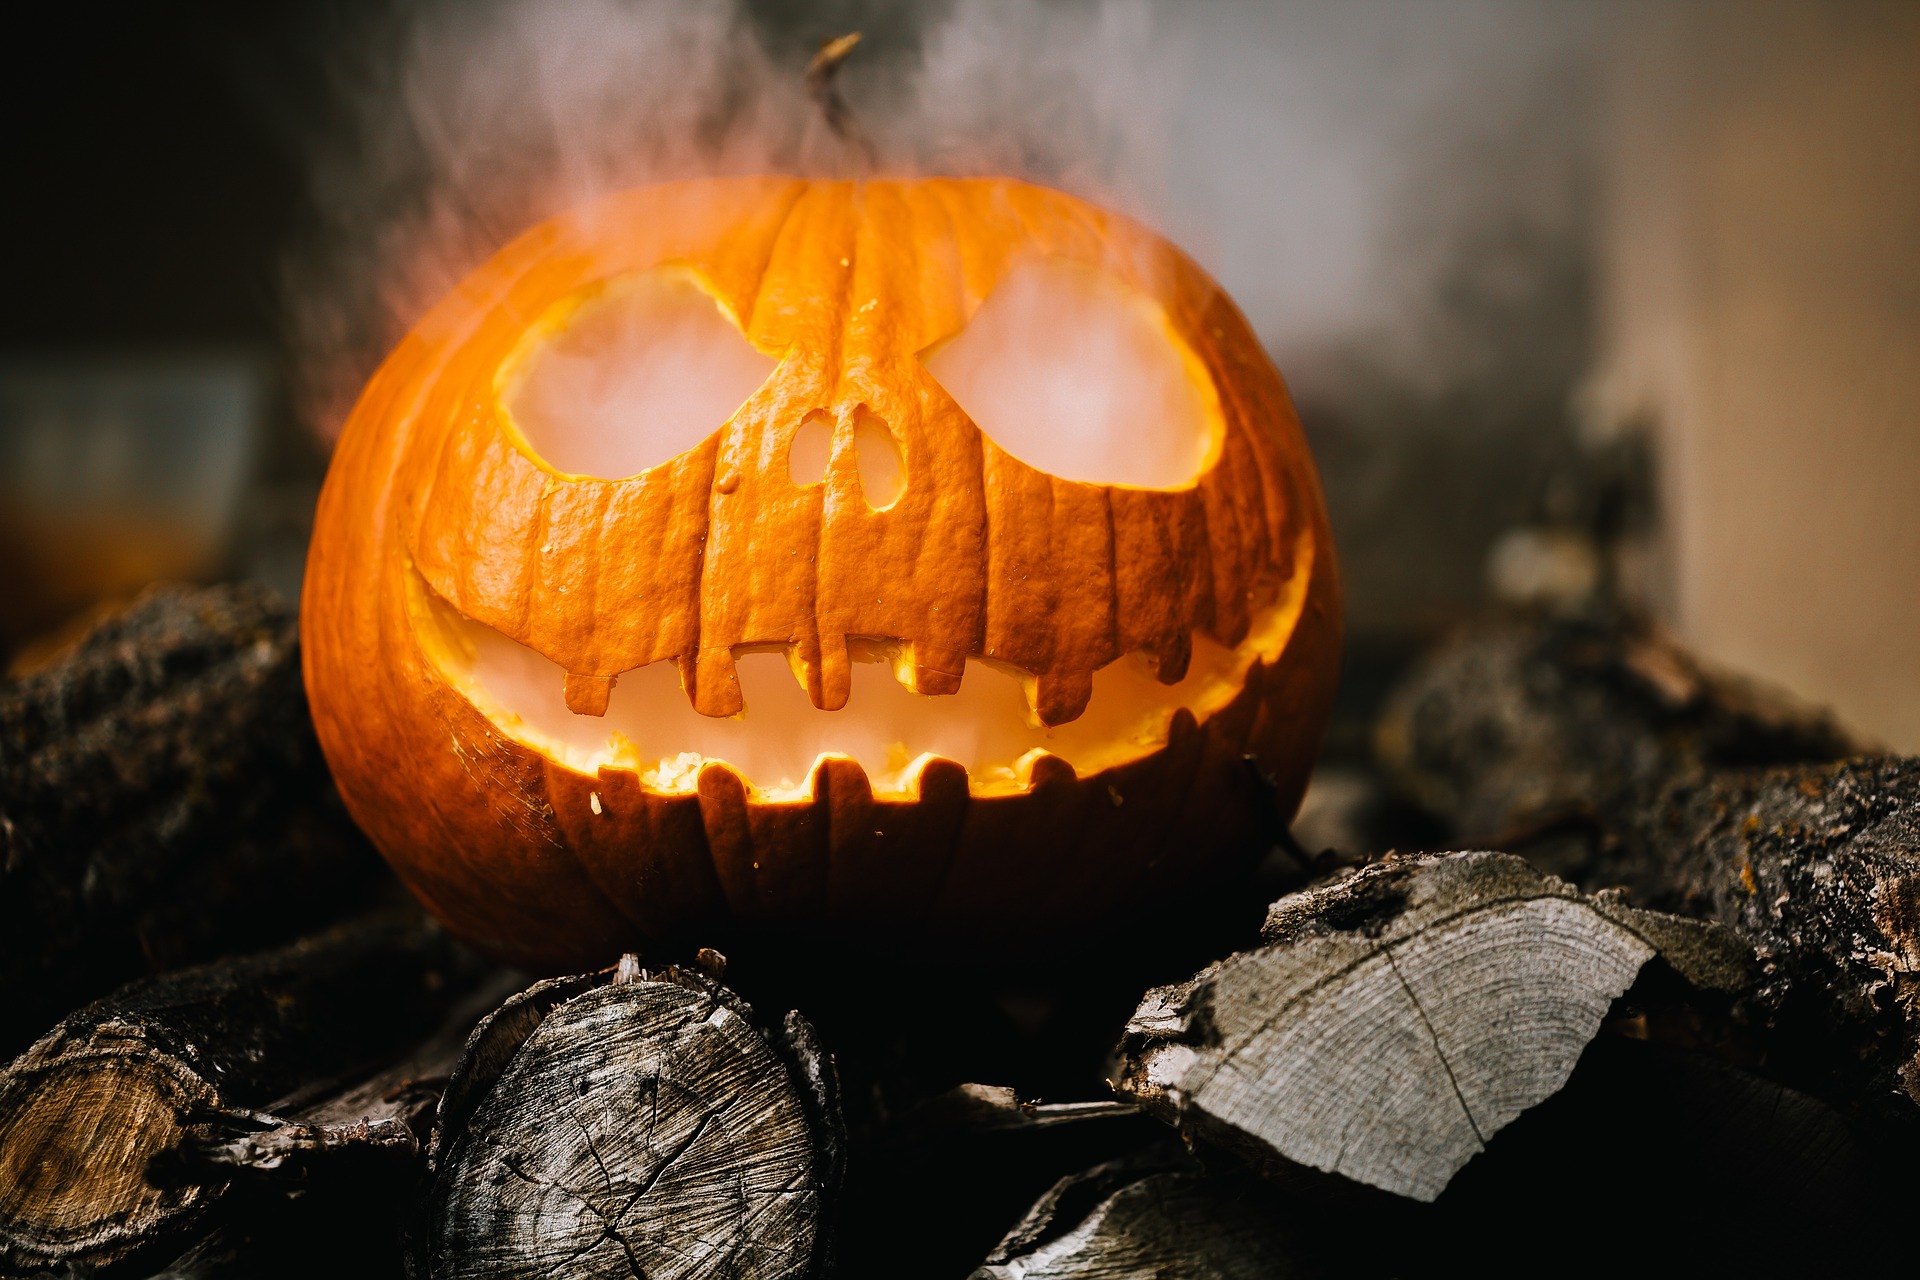 Image shows pumpkin